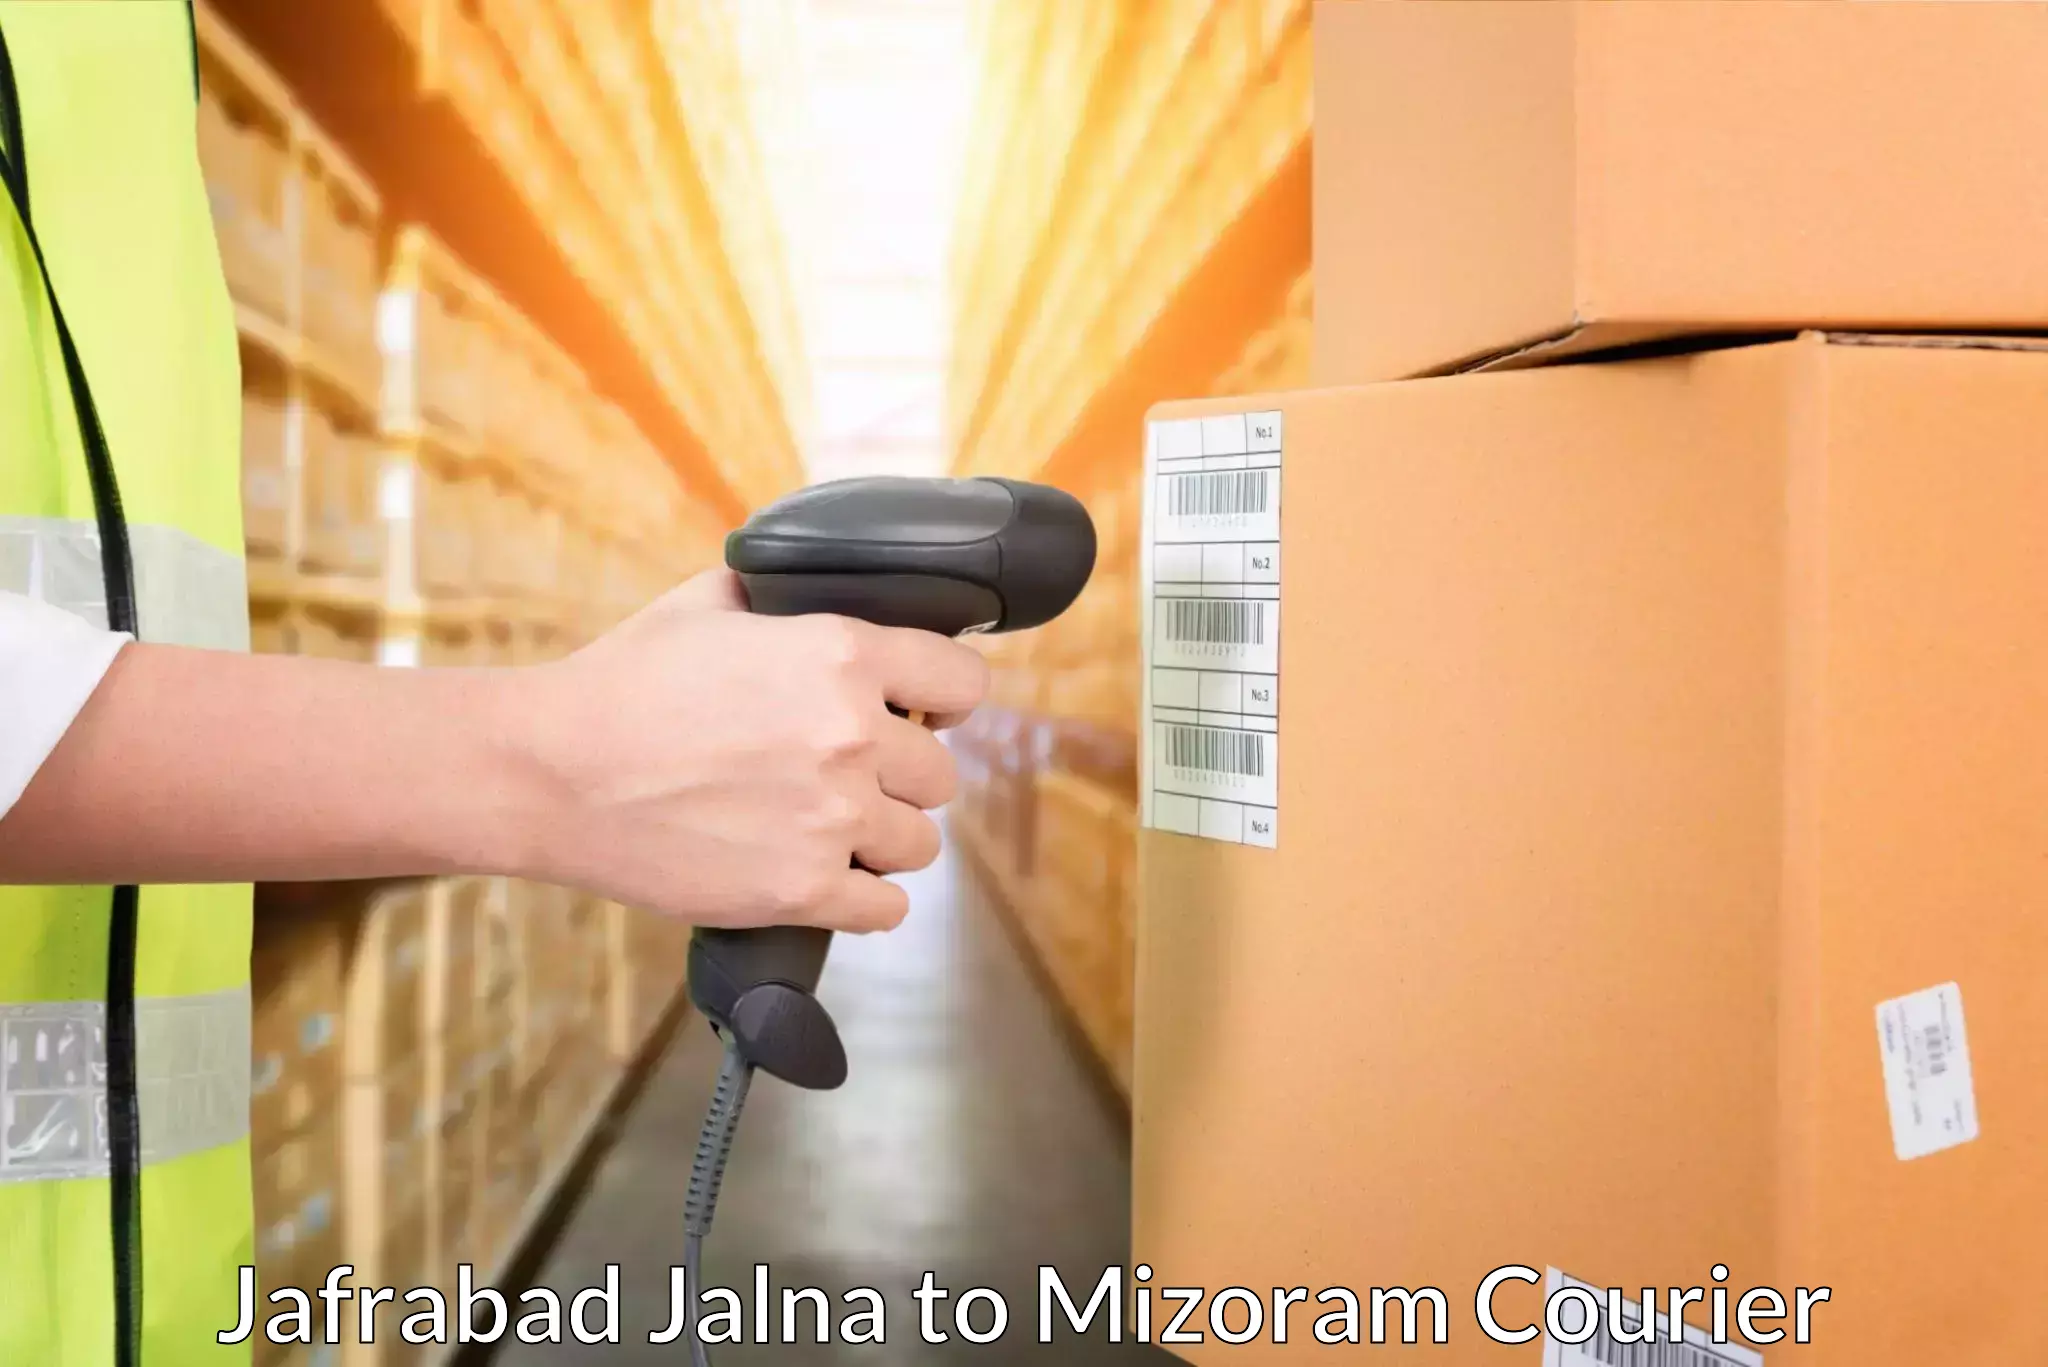 Courier service innovation Jafrabad Jalna to Mizoram